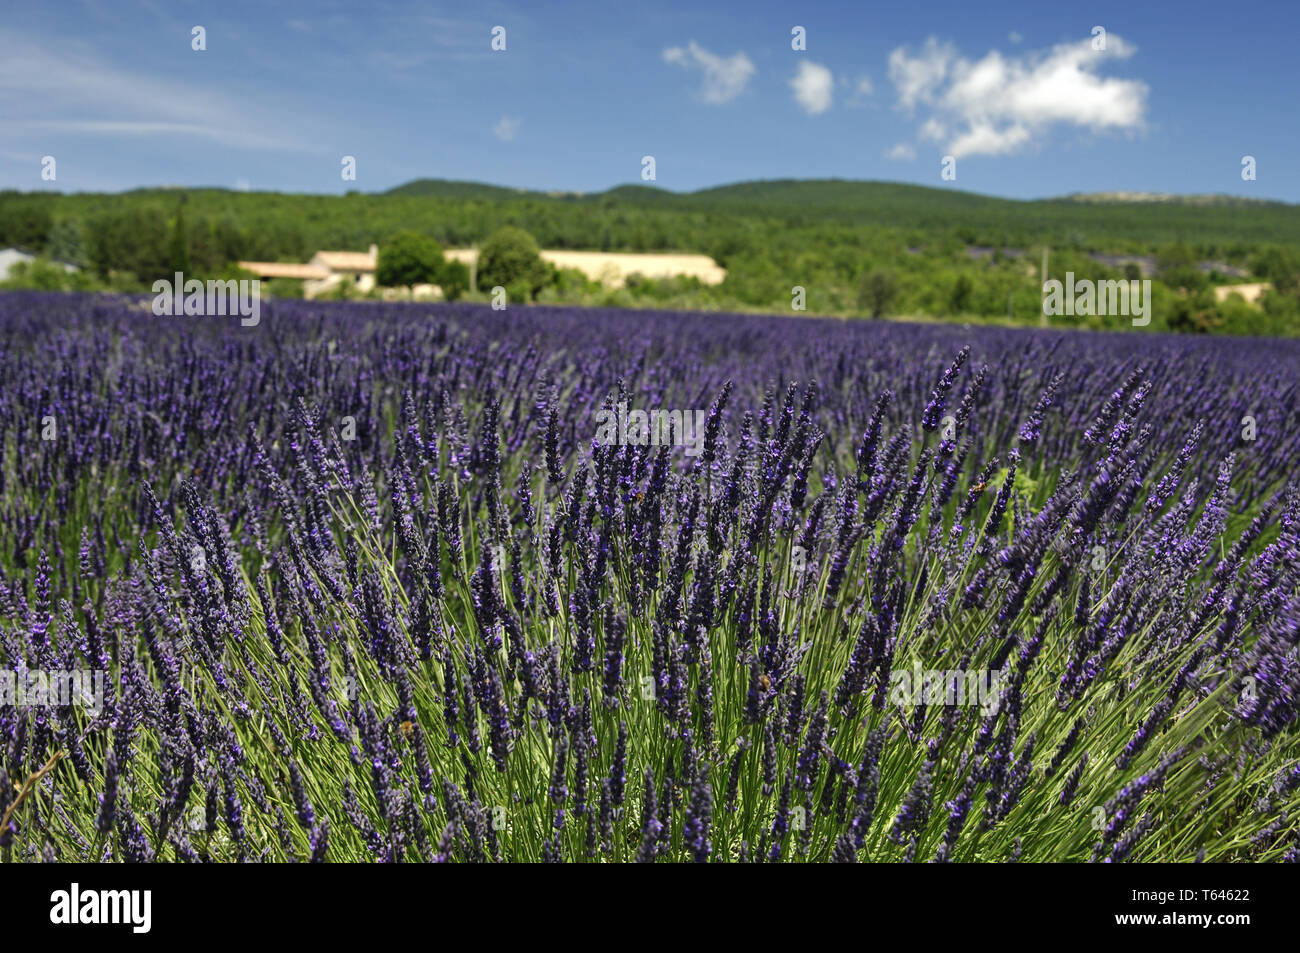 Lavender plant, Lavandula angustifolia Stock Photo